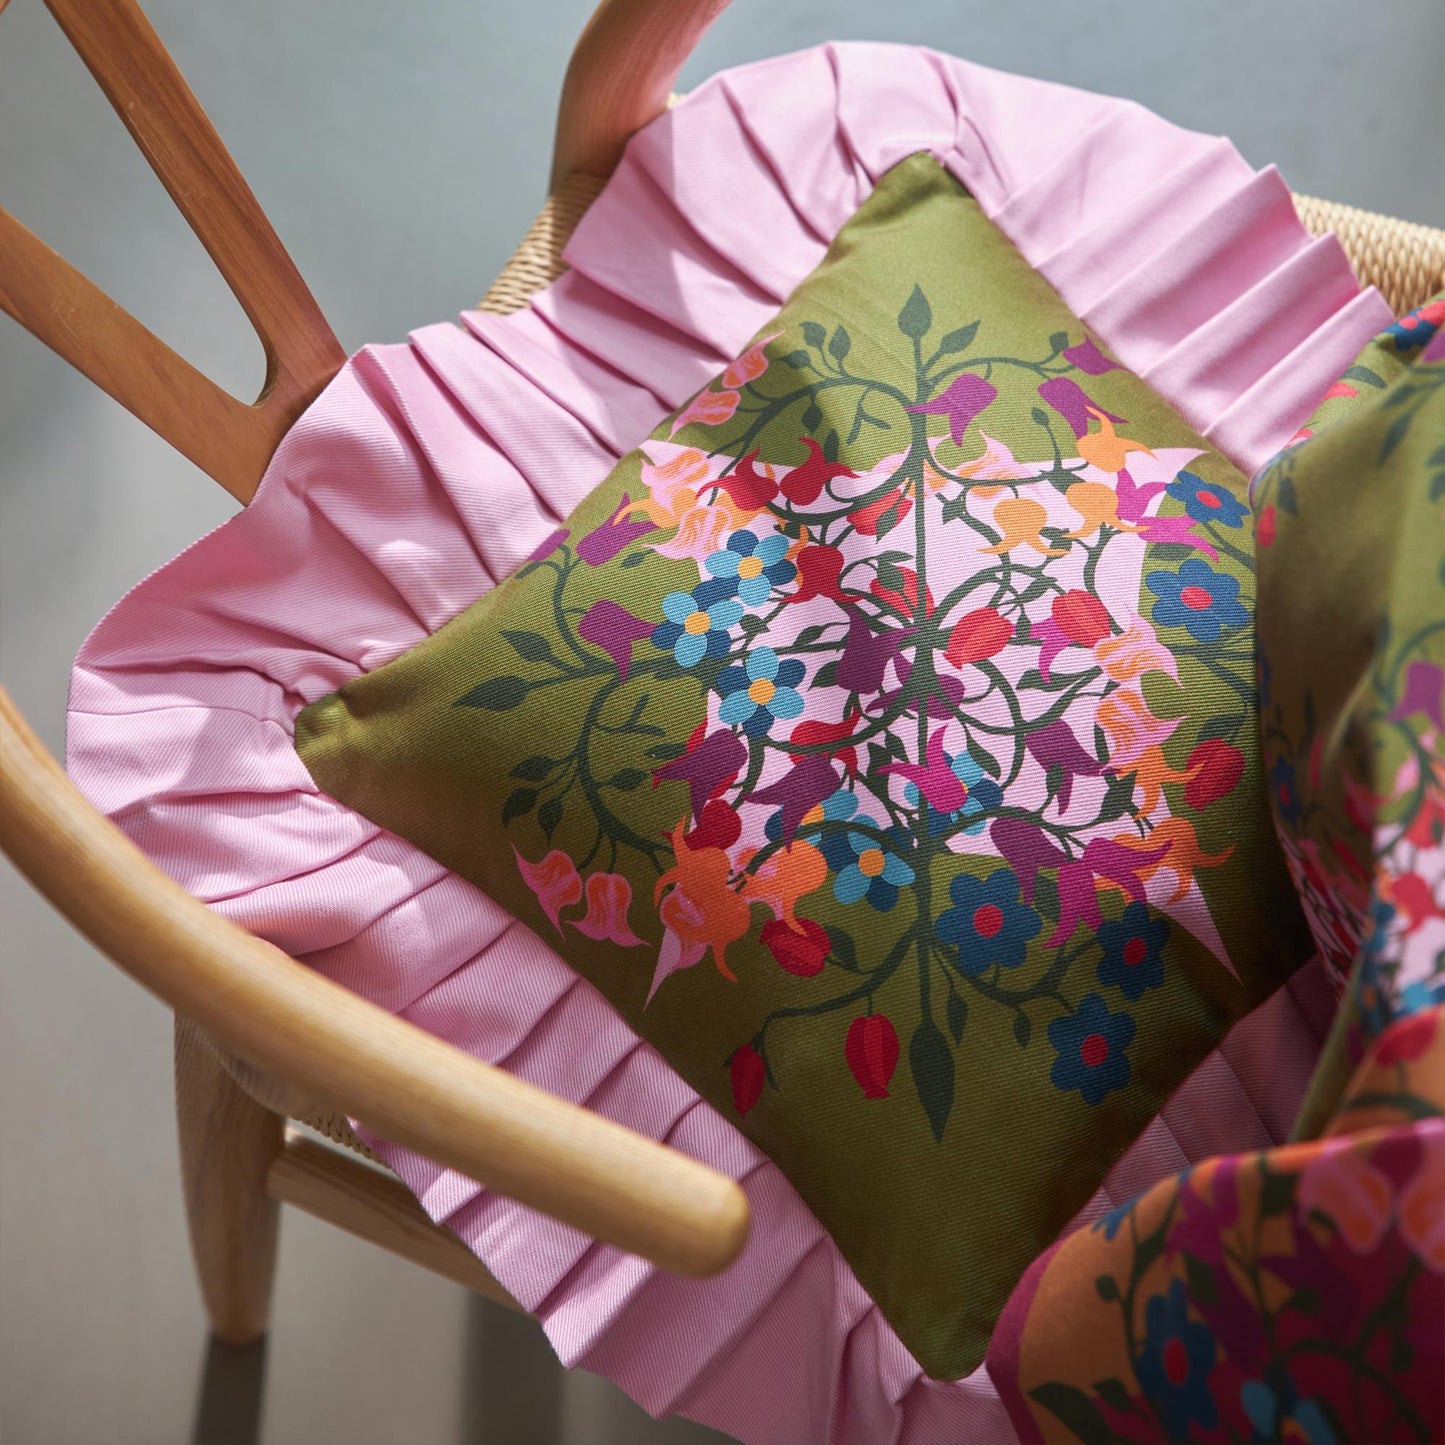 Ruffled Pillow Cover Blumen Green - Sophie Williamson Design